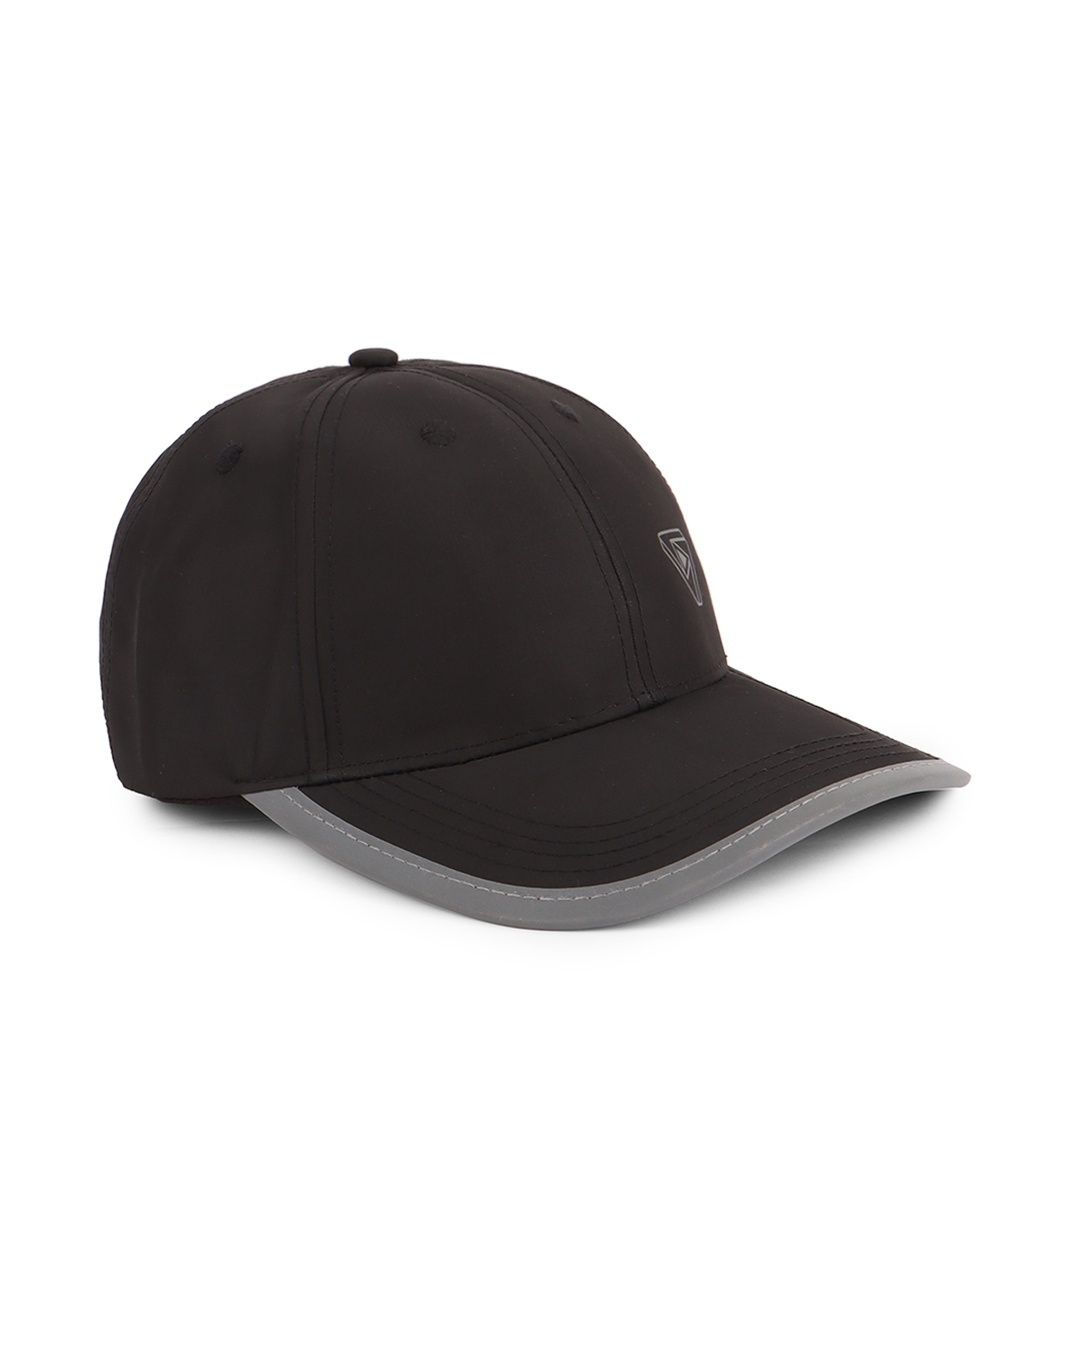 Shop Unisex Black Reflective Baseball Cap-Back